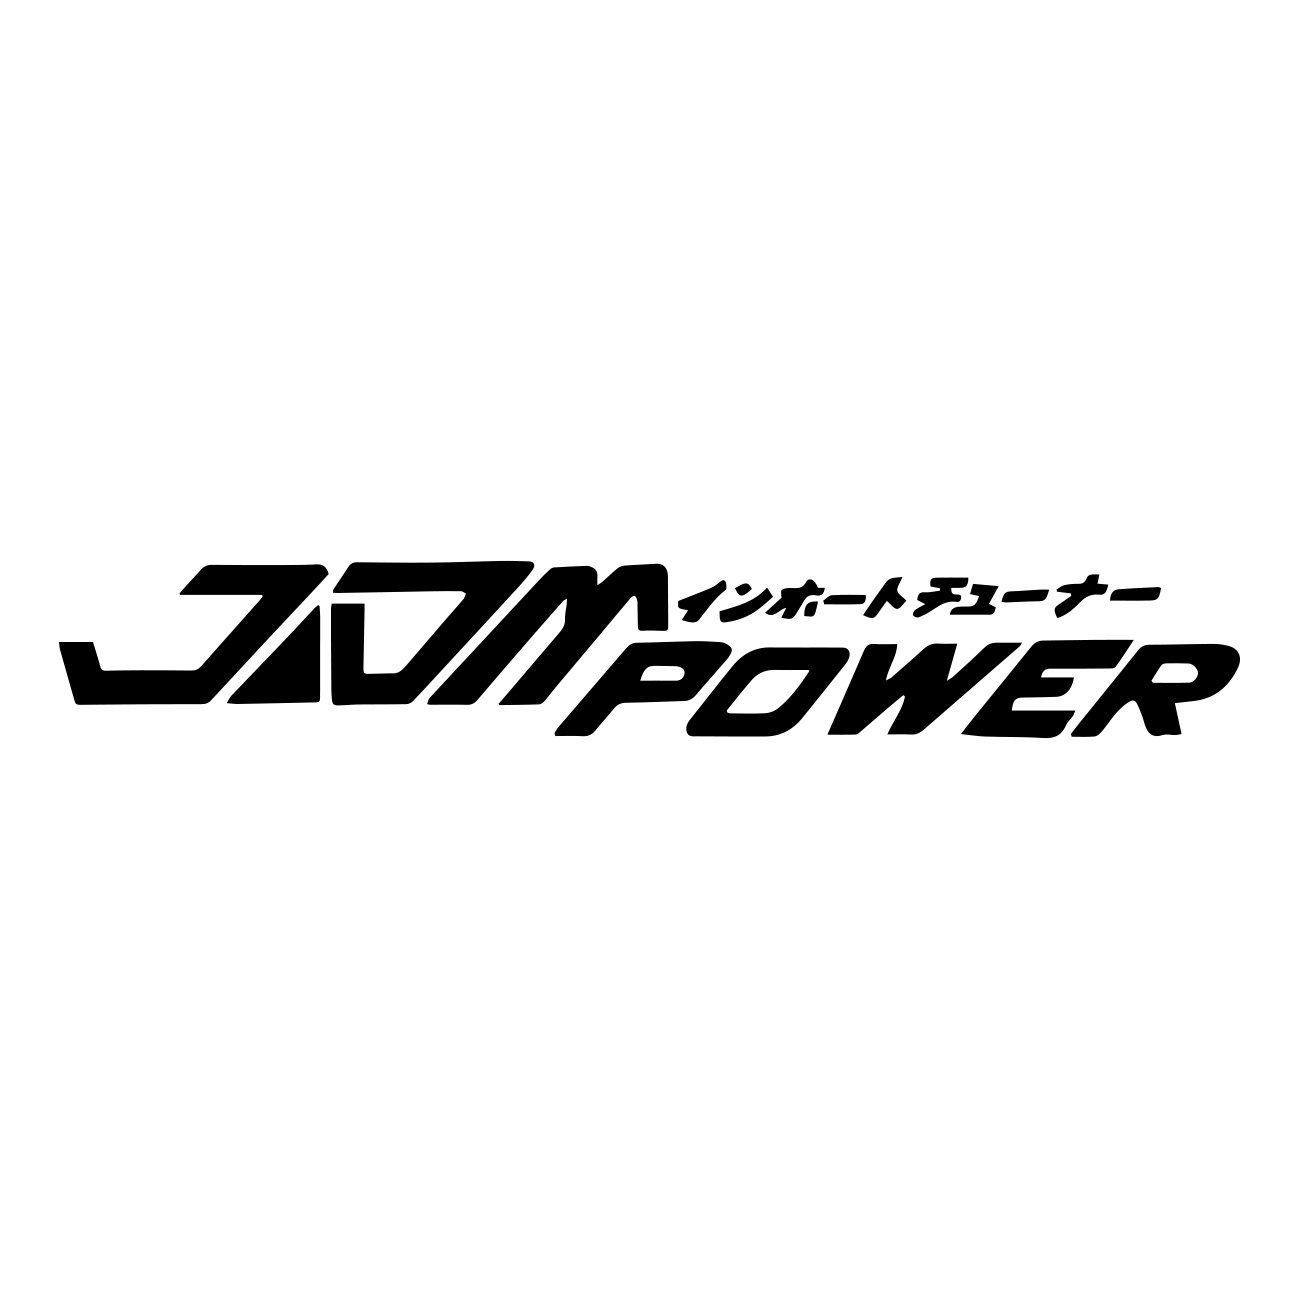 jdm power